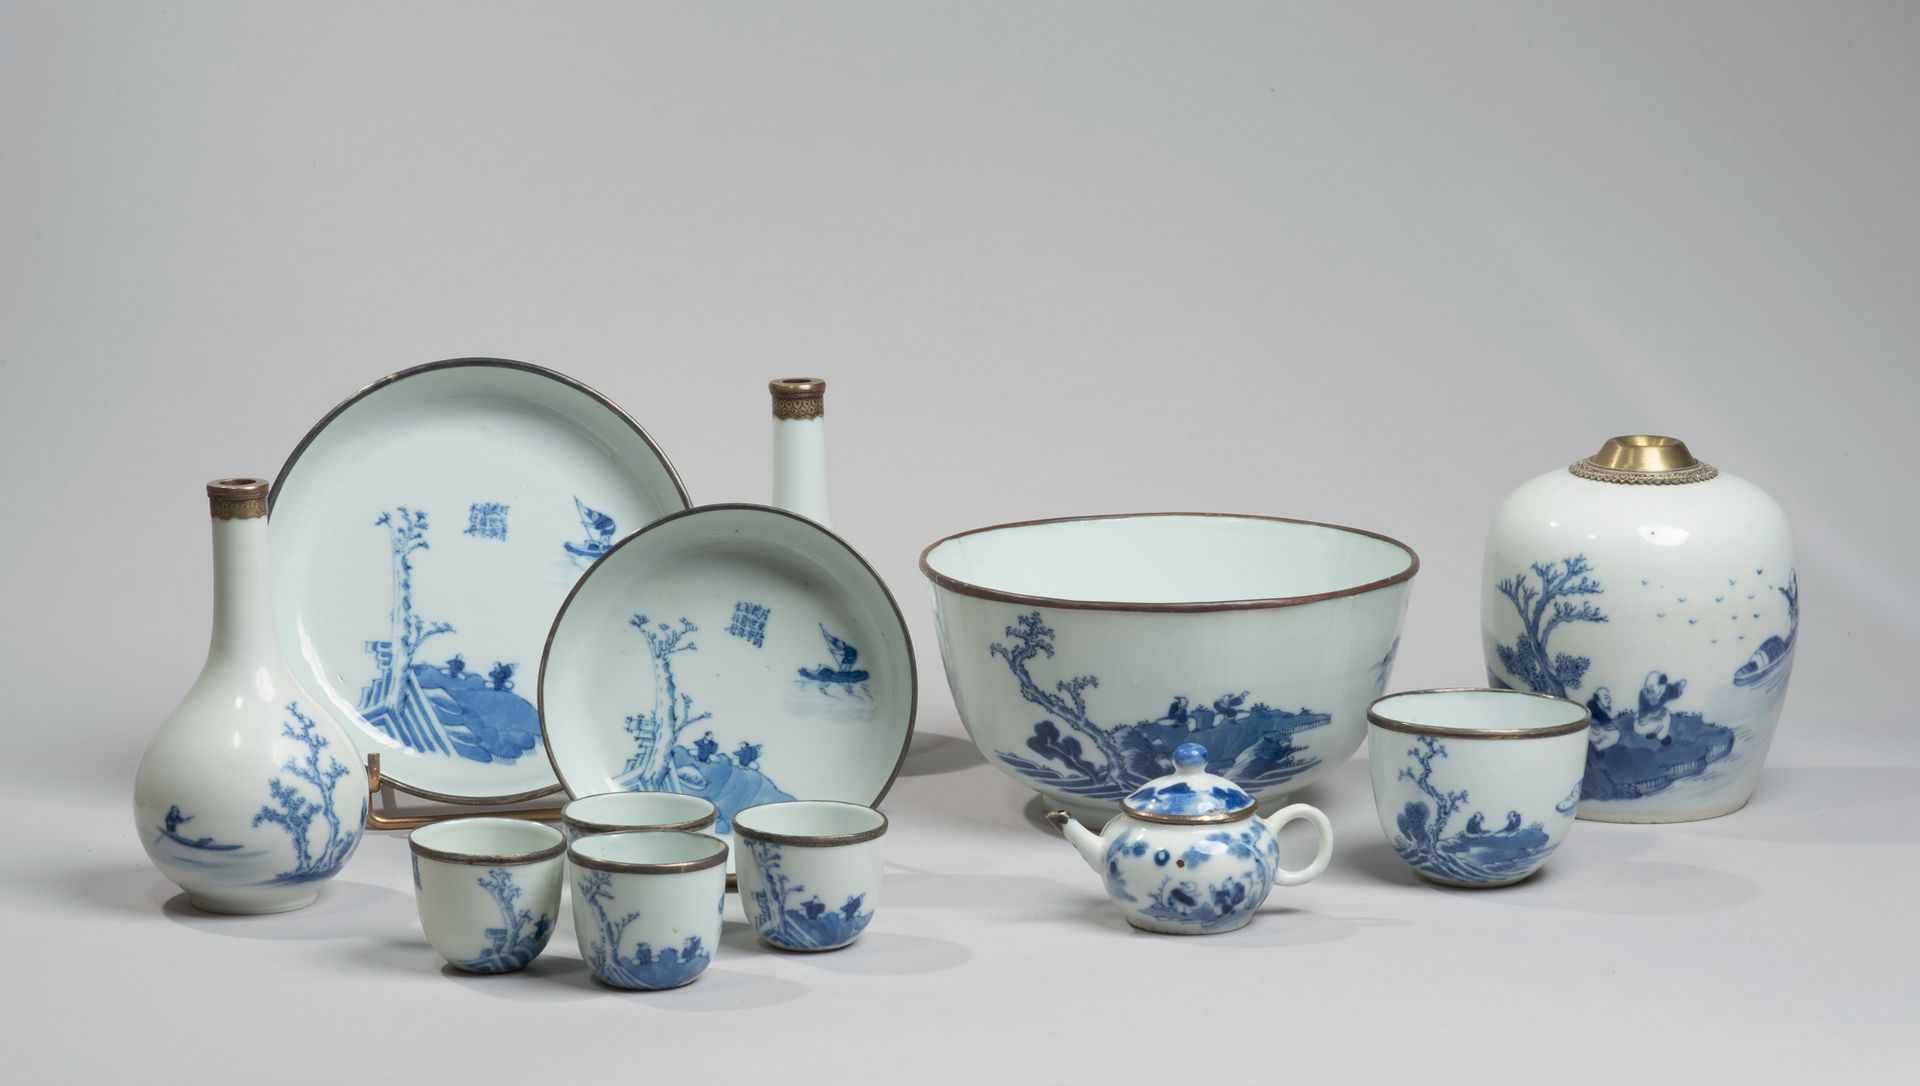 VIETNAM, Hue - XIXe siècle 
Service à thé de douze pièces comprenant un pot, deu&hellip;